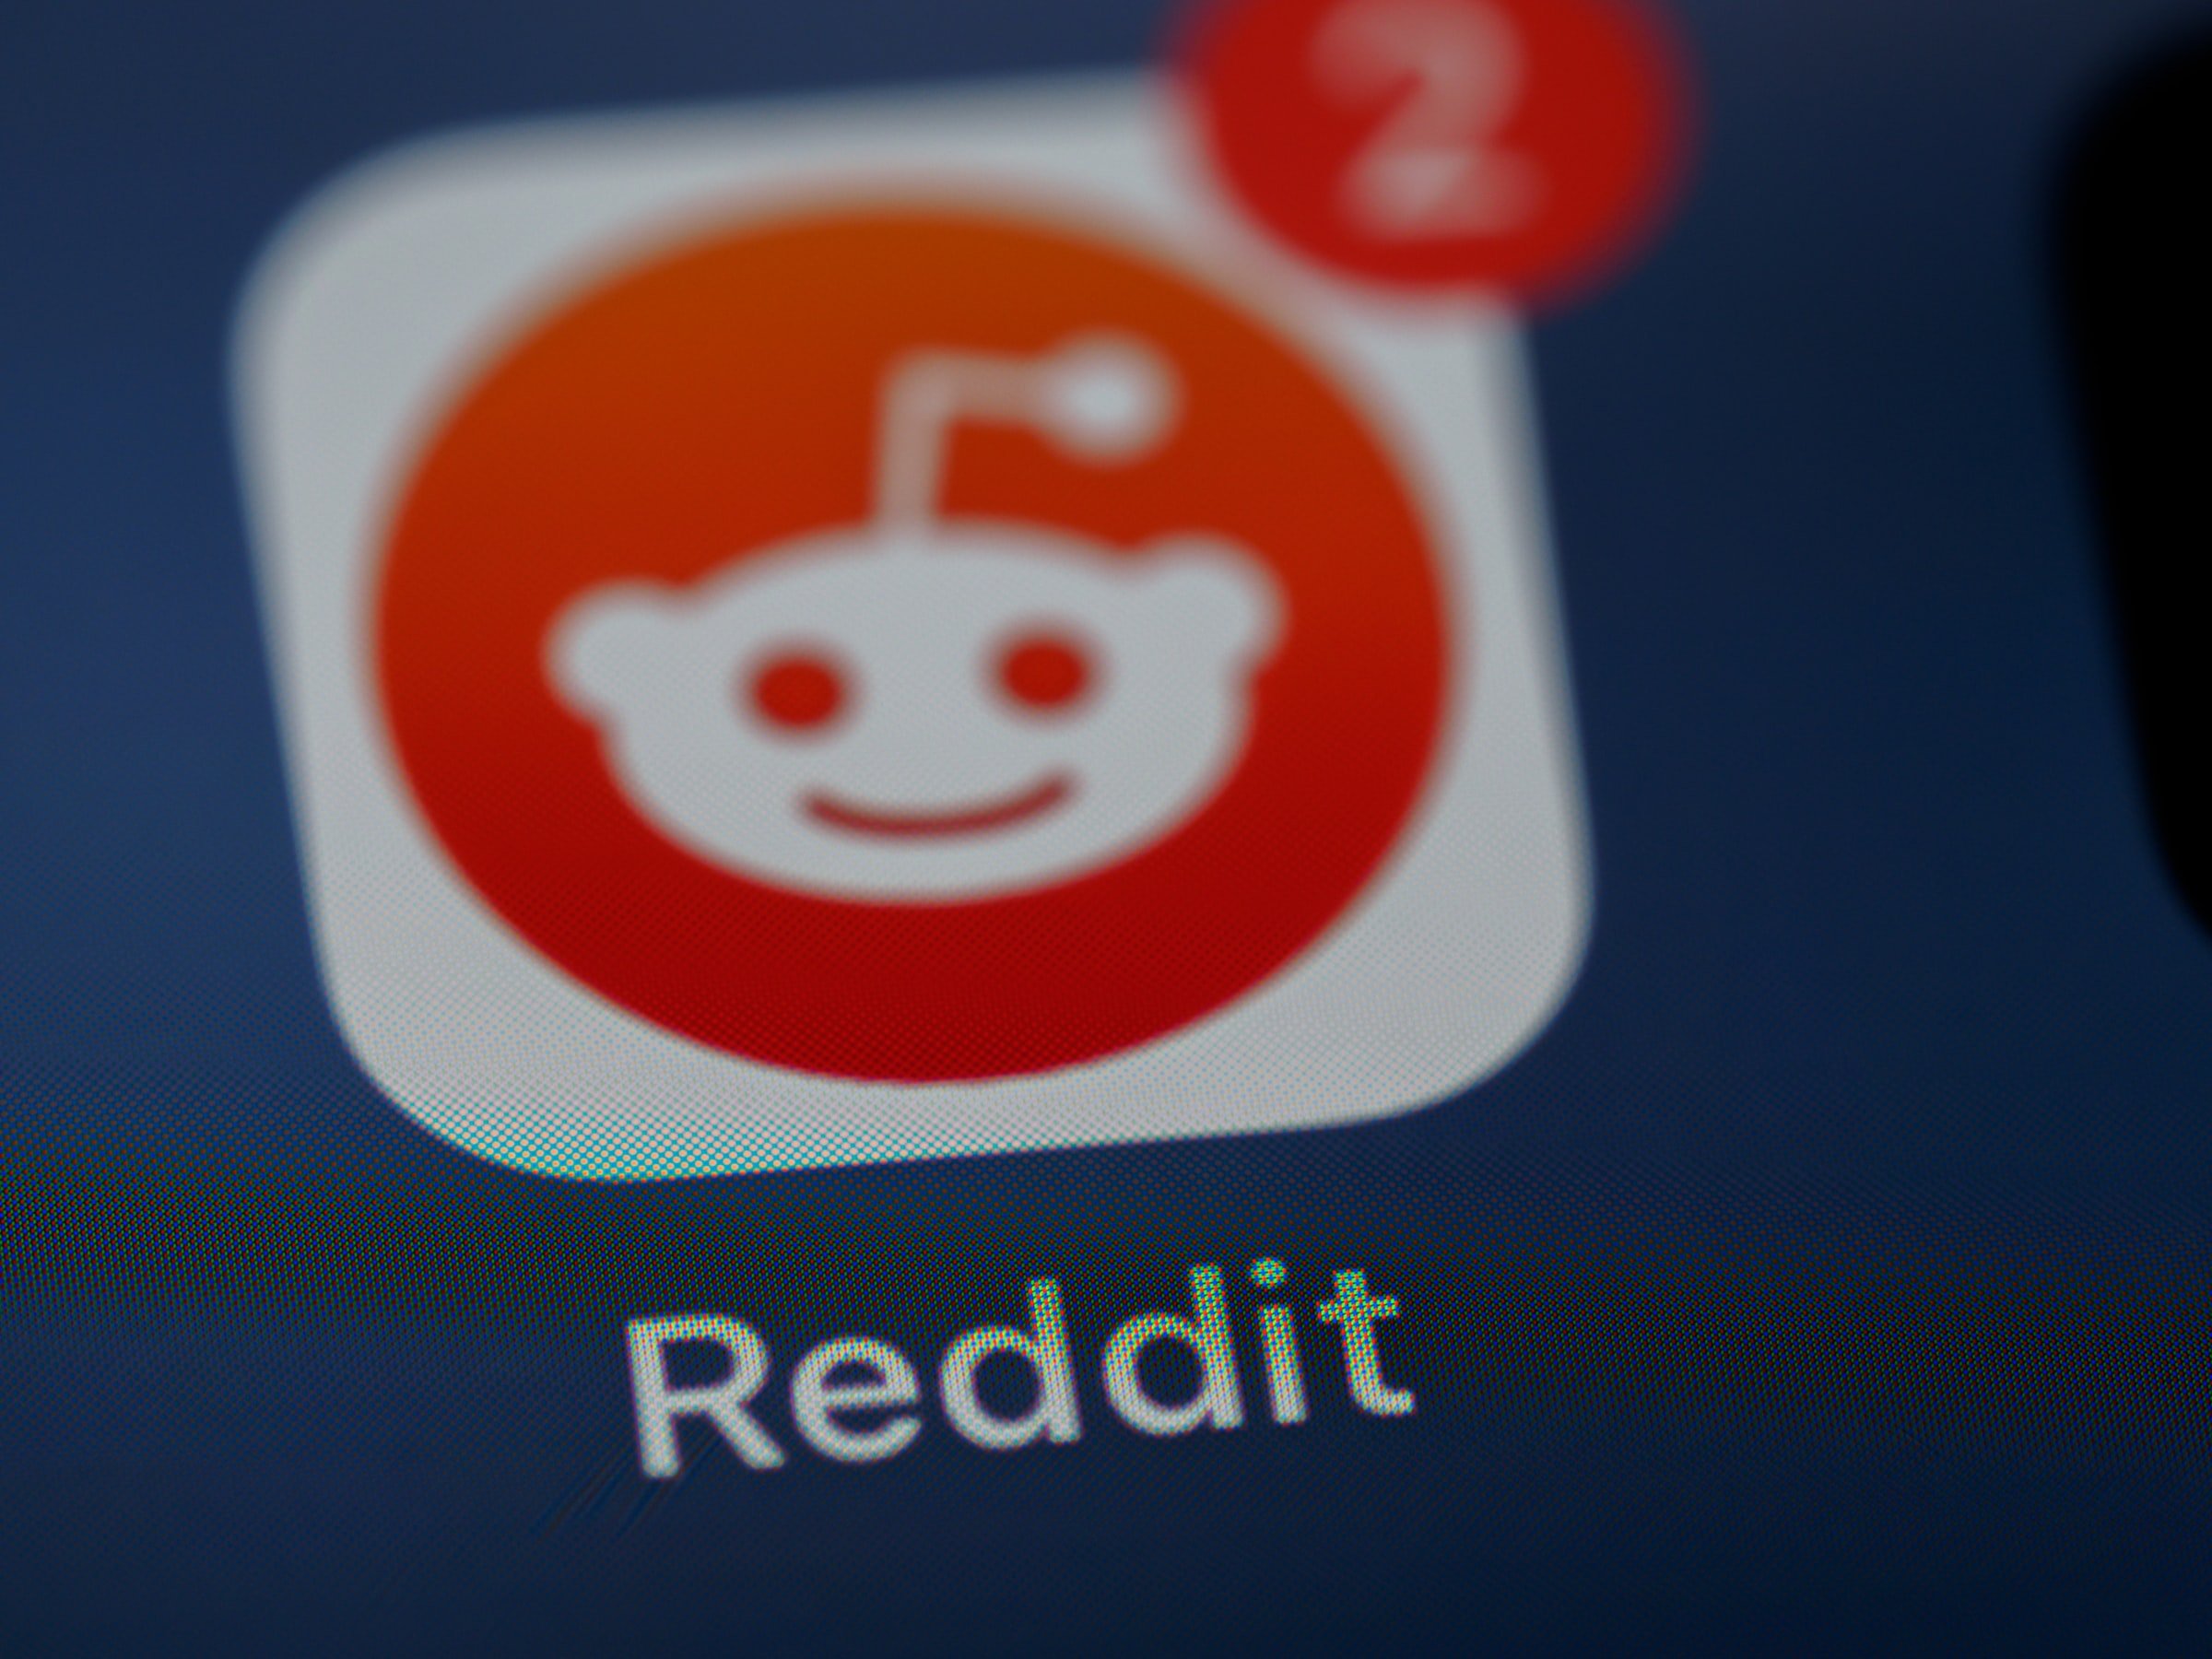 Reddit logo on a screen | Source: Unsplash